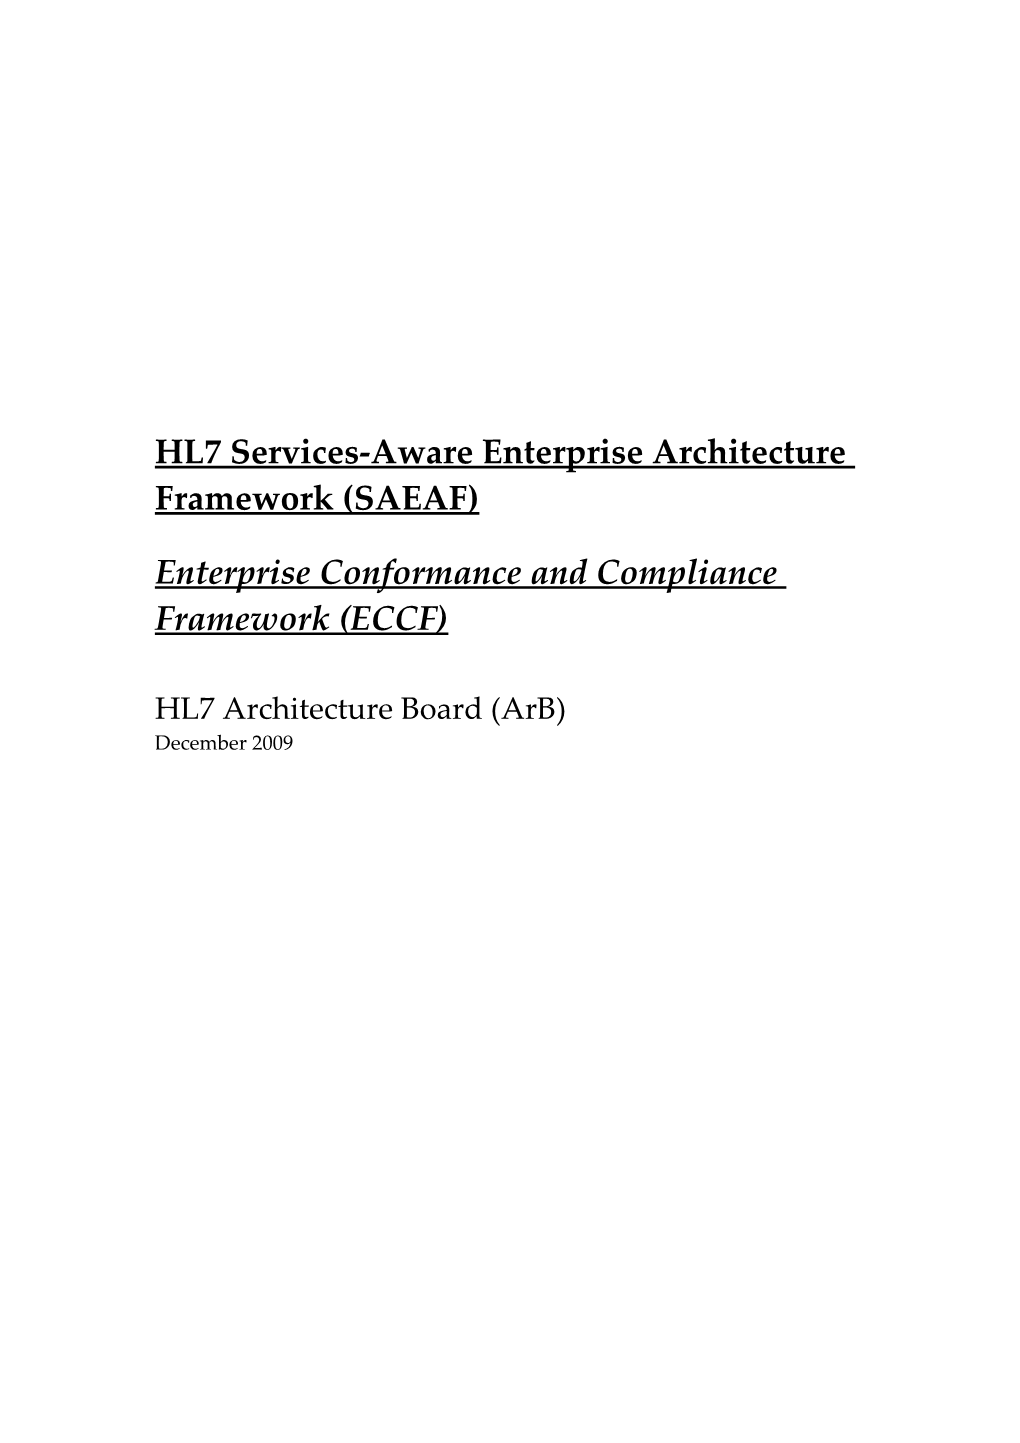 Enterprise Conformance and Compliance Framework (ECCF)